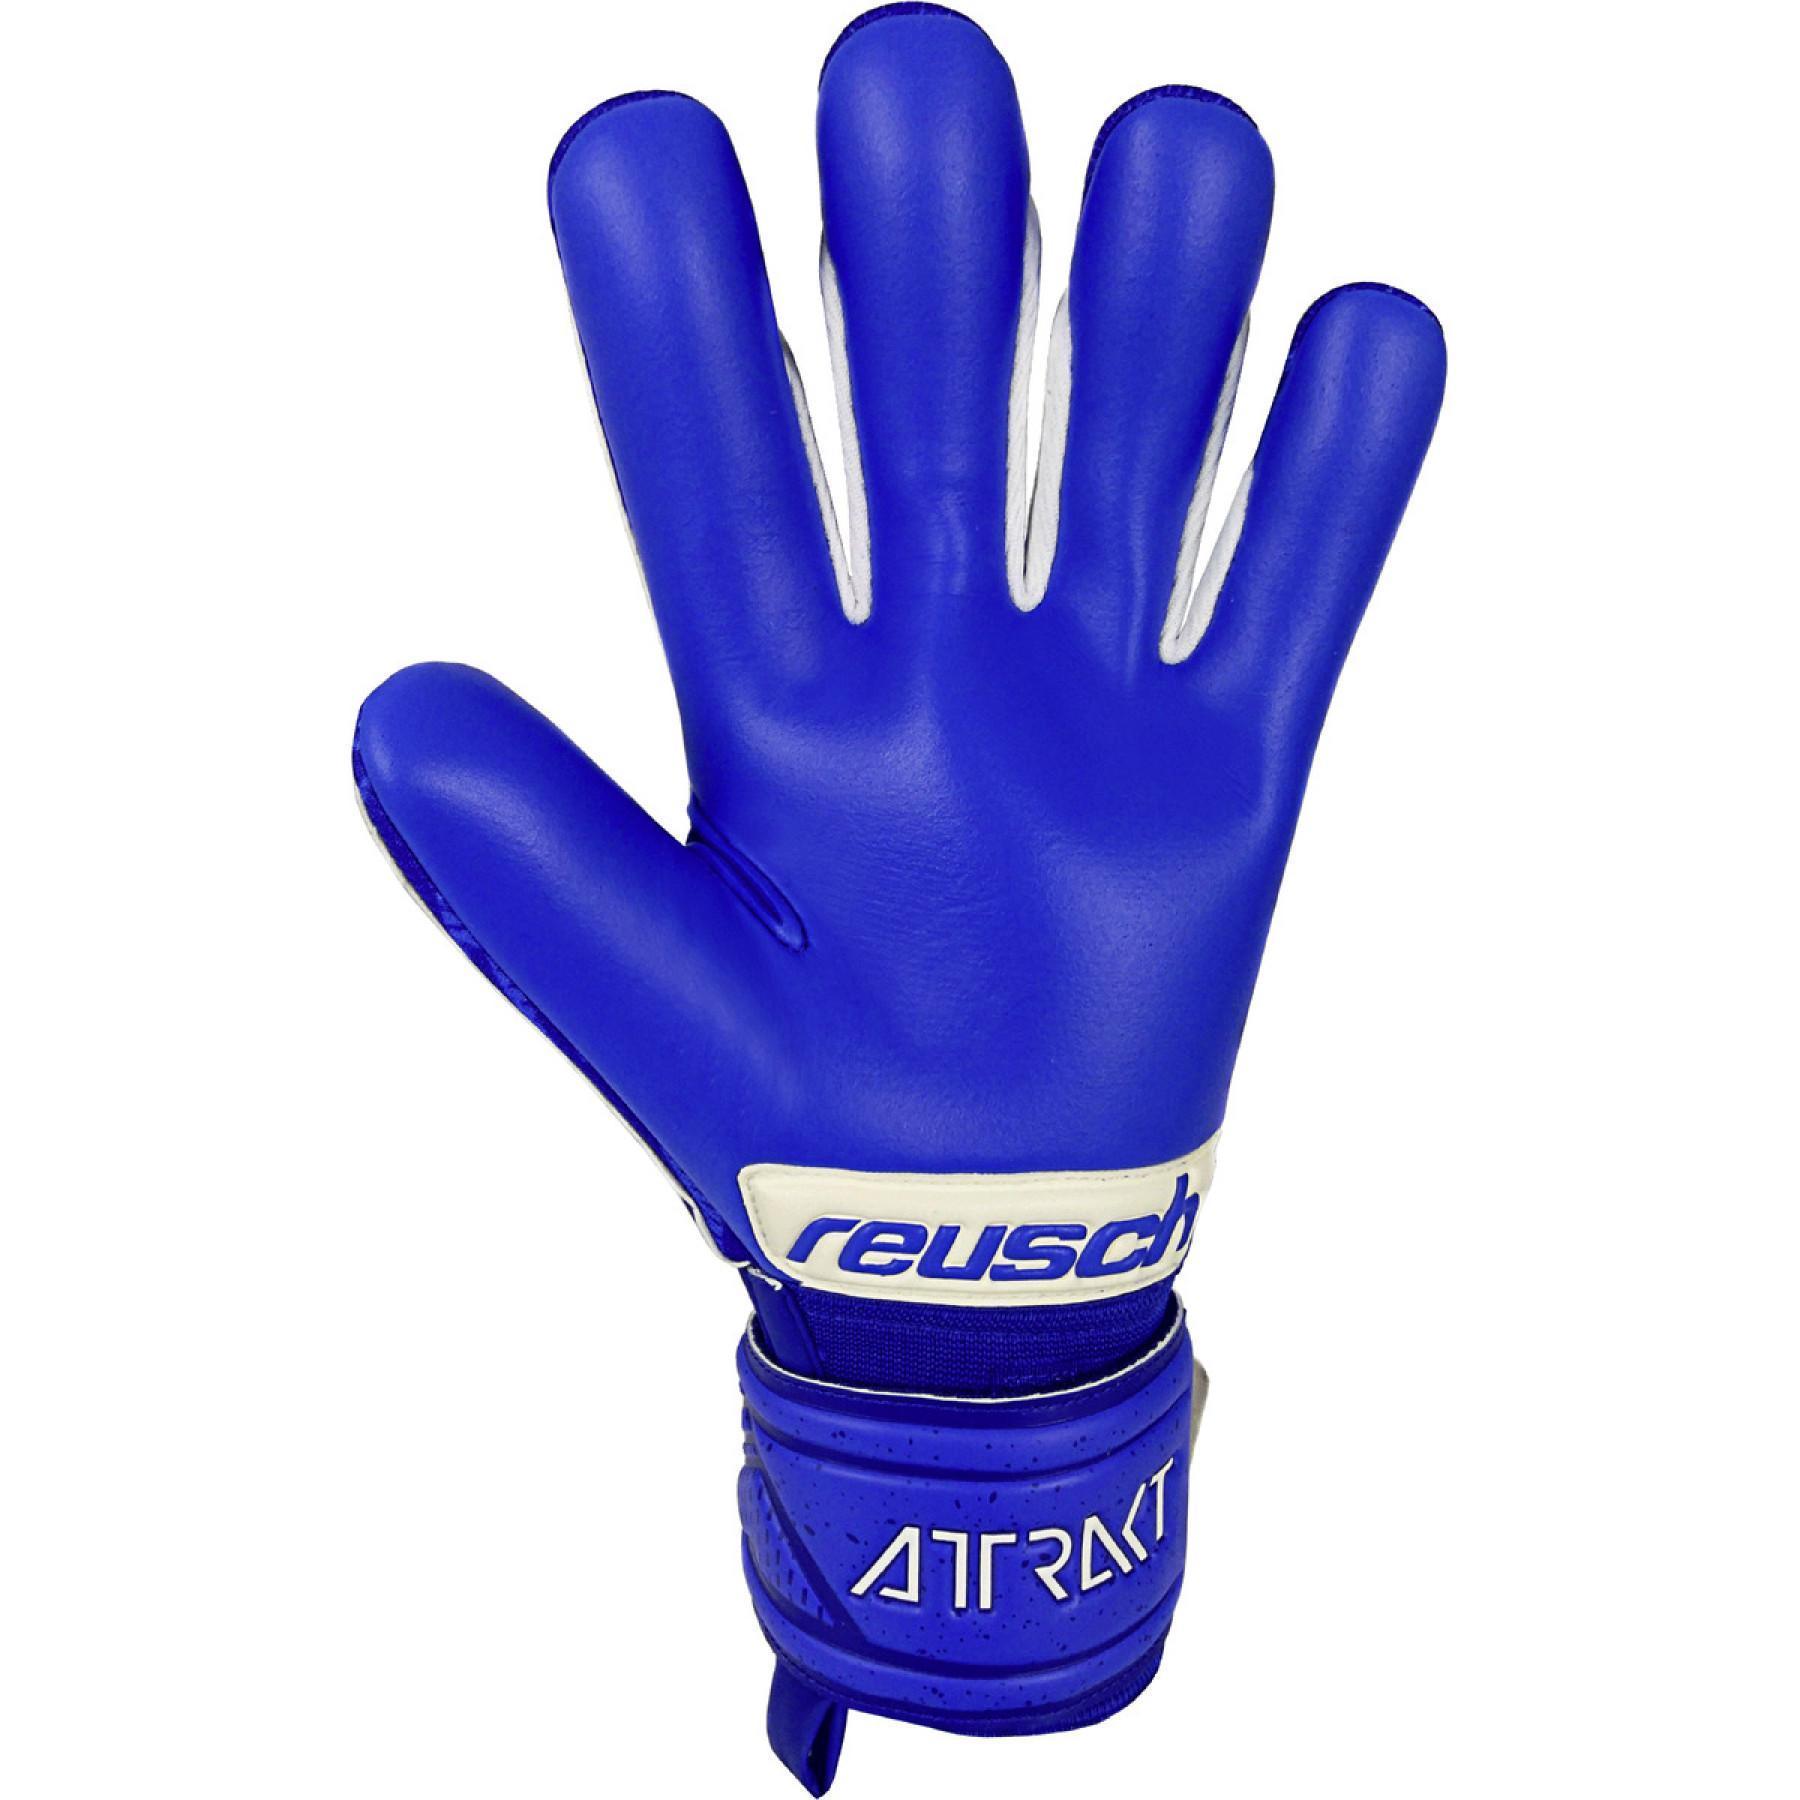 Goalkeeper gloves Reusch Attrakt Grip Evolution Finger Support